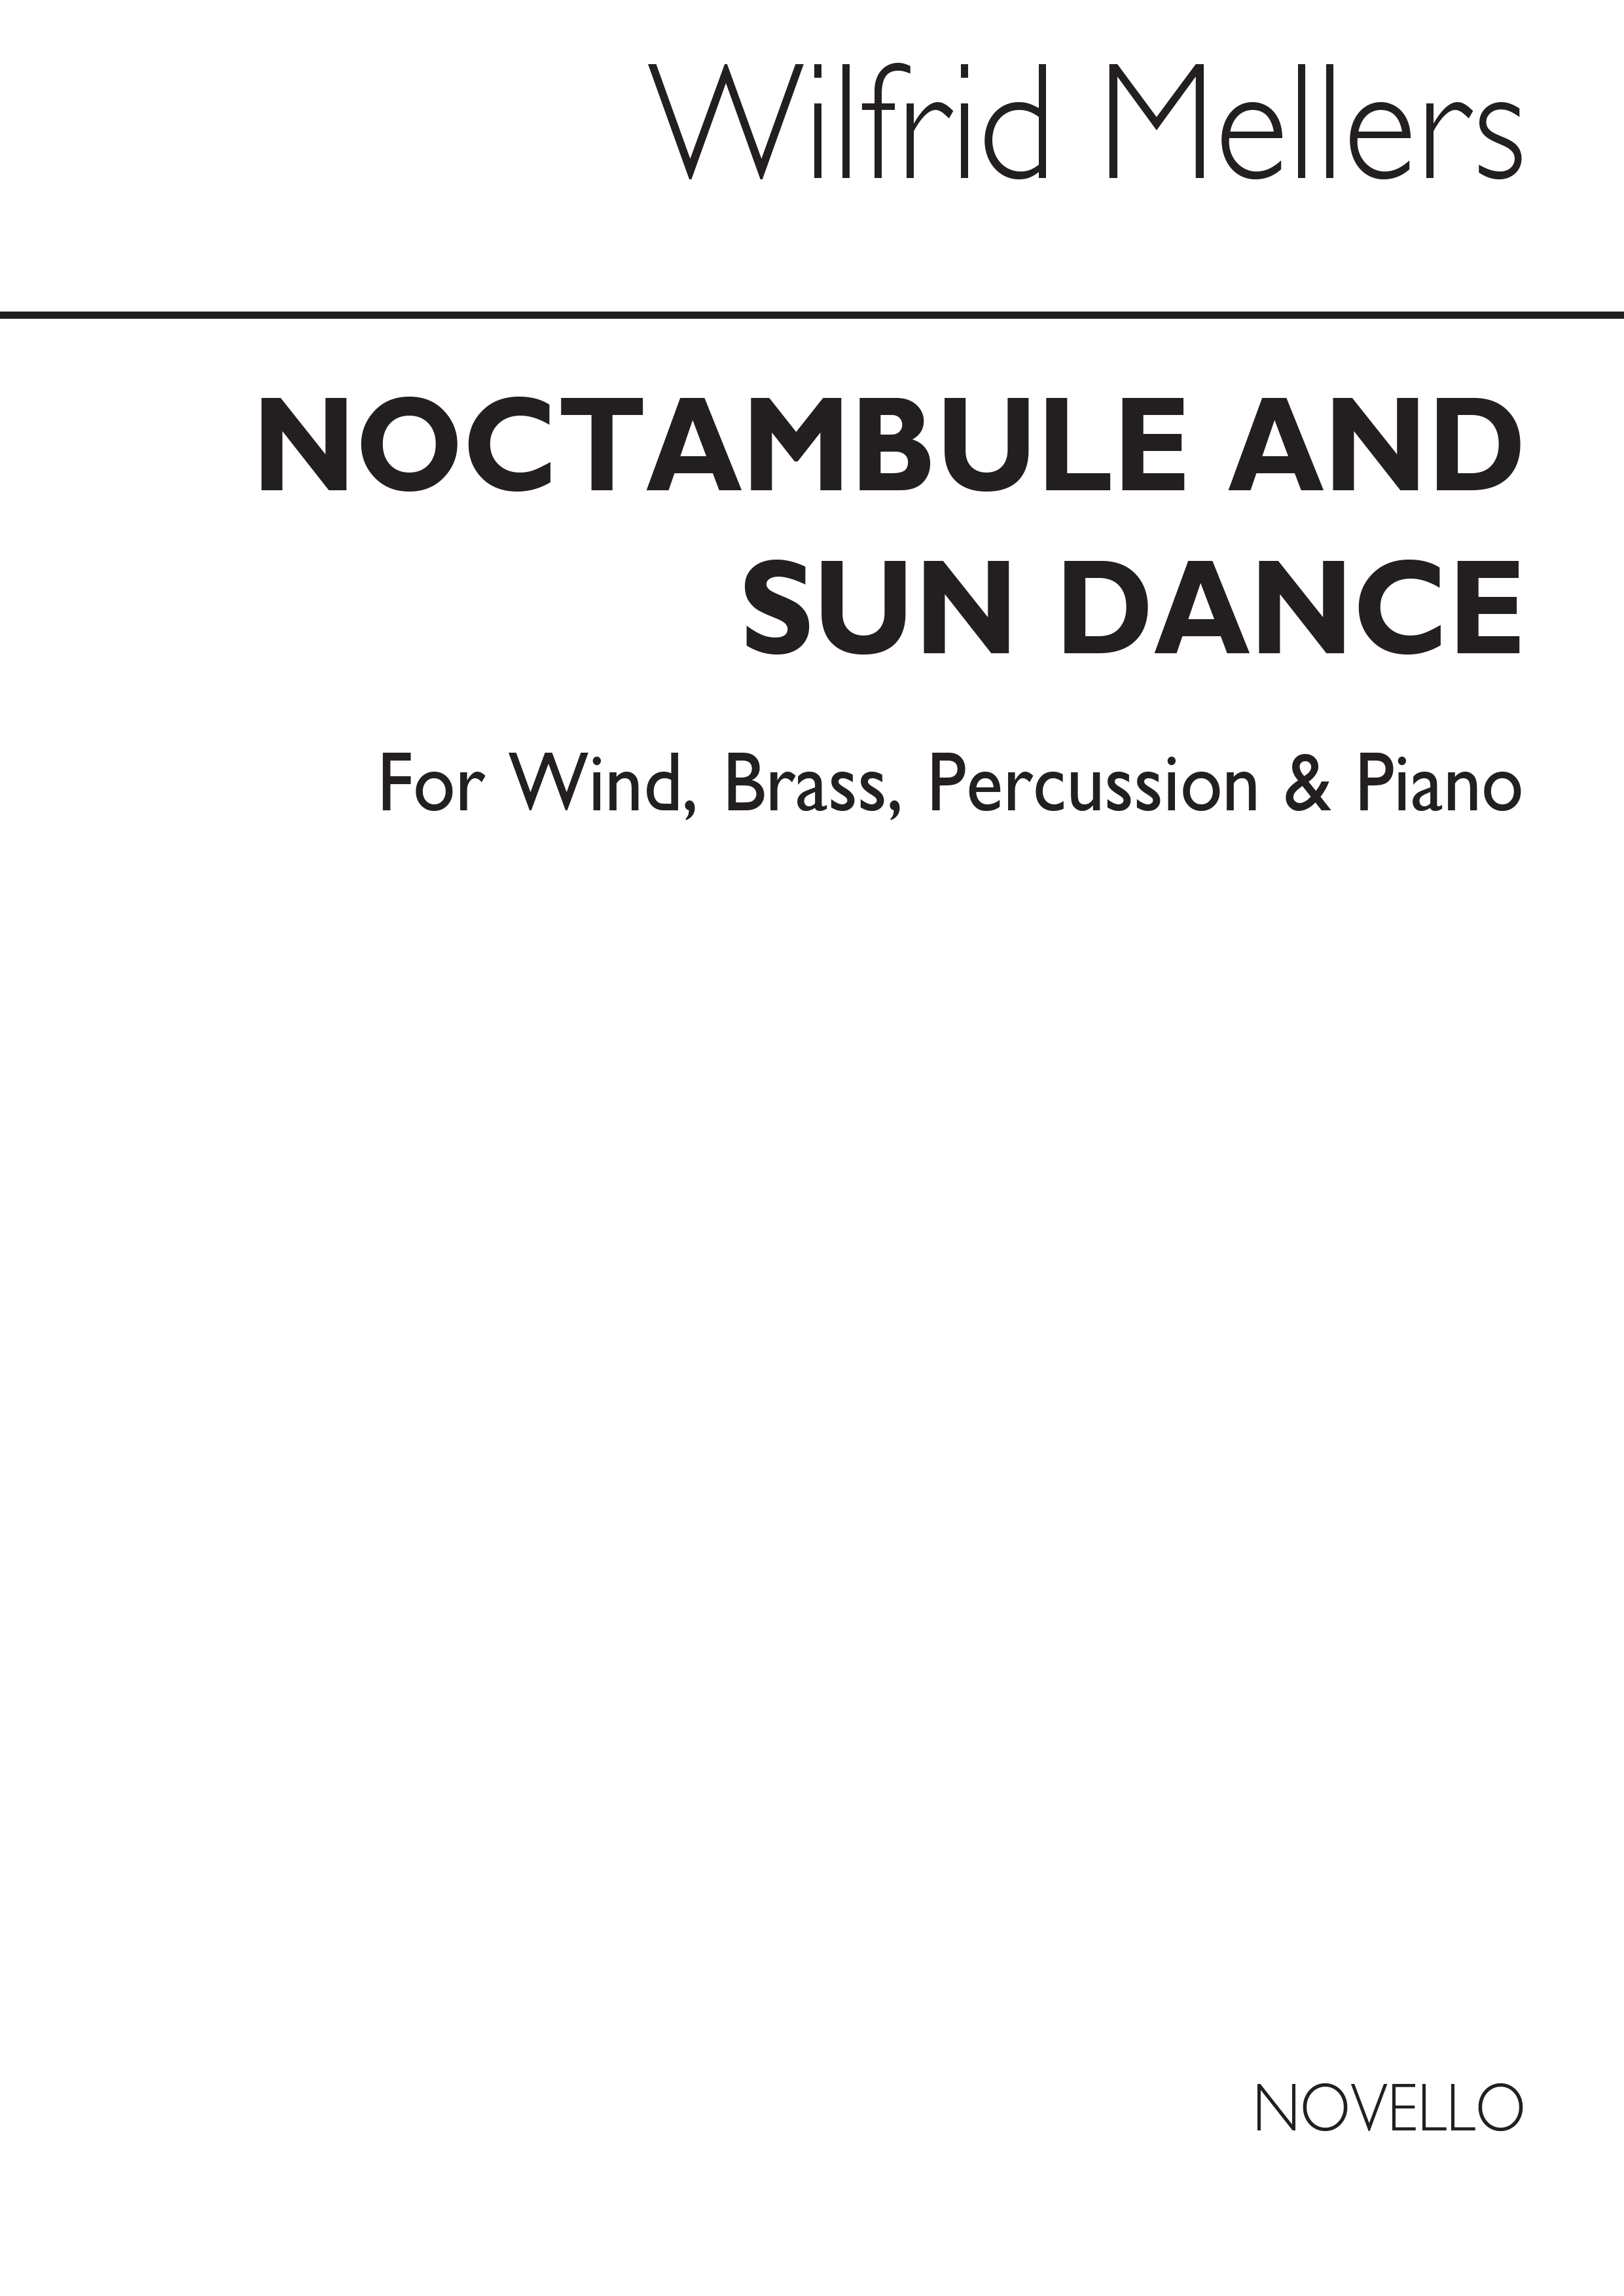 Wilfrid Mellers: Noctambule & Sun Dance for Wind Ensemble: Wind Ensemble: Score